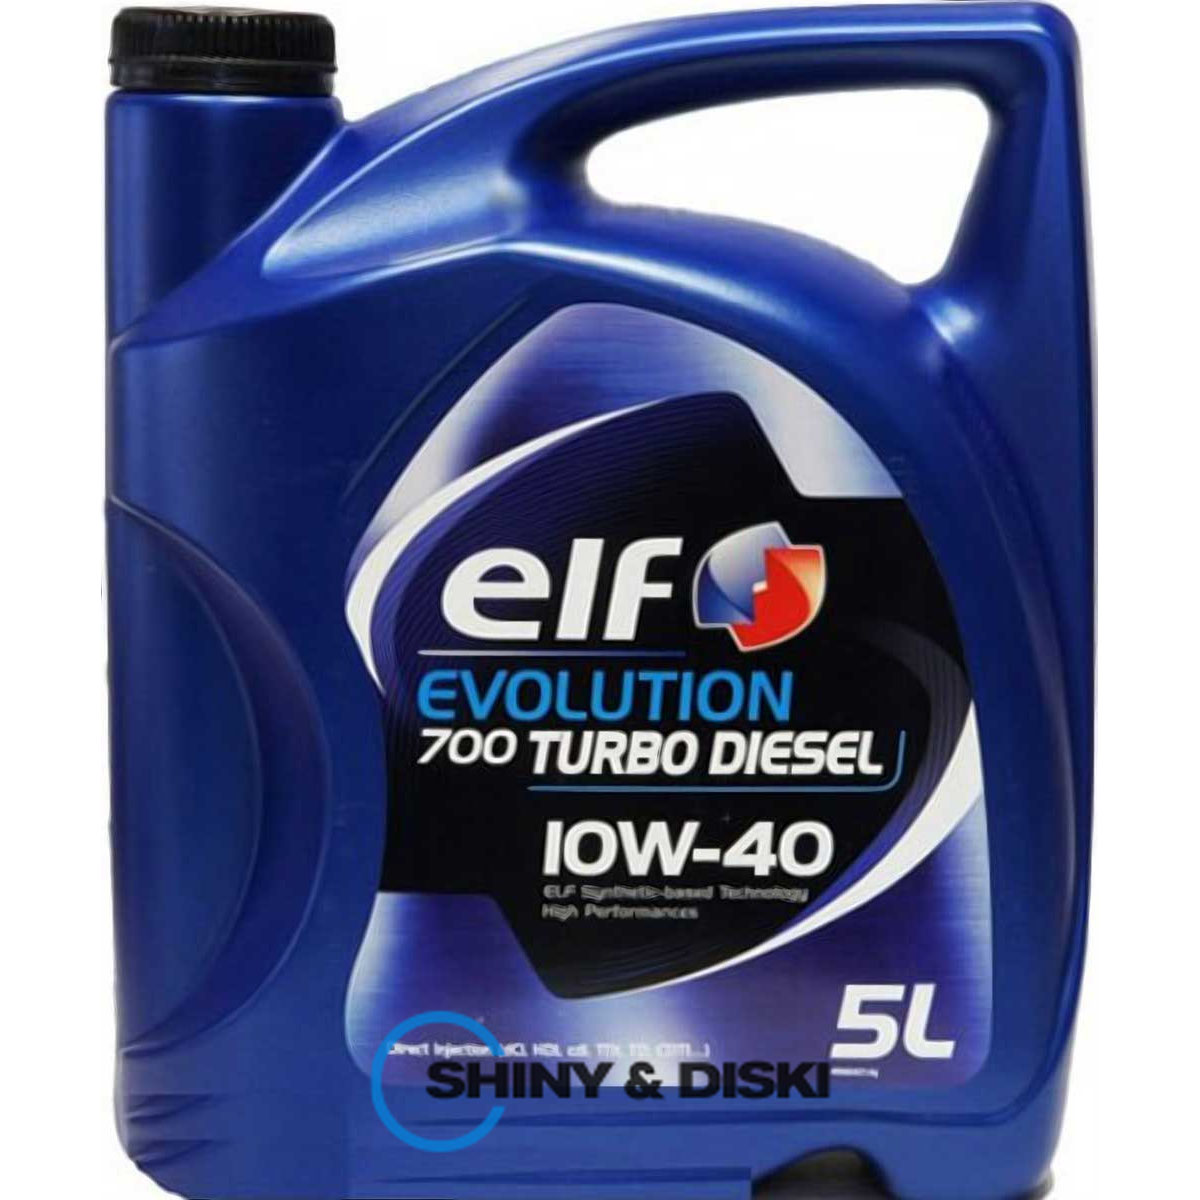 elf evolution 700 turbo diesel